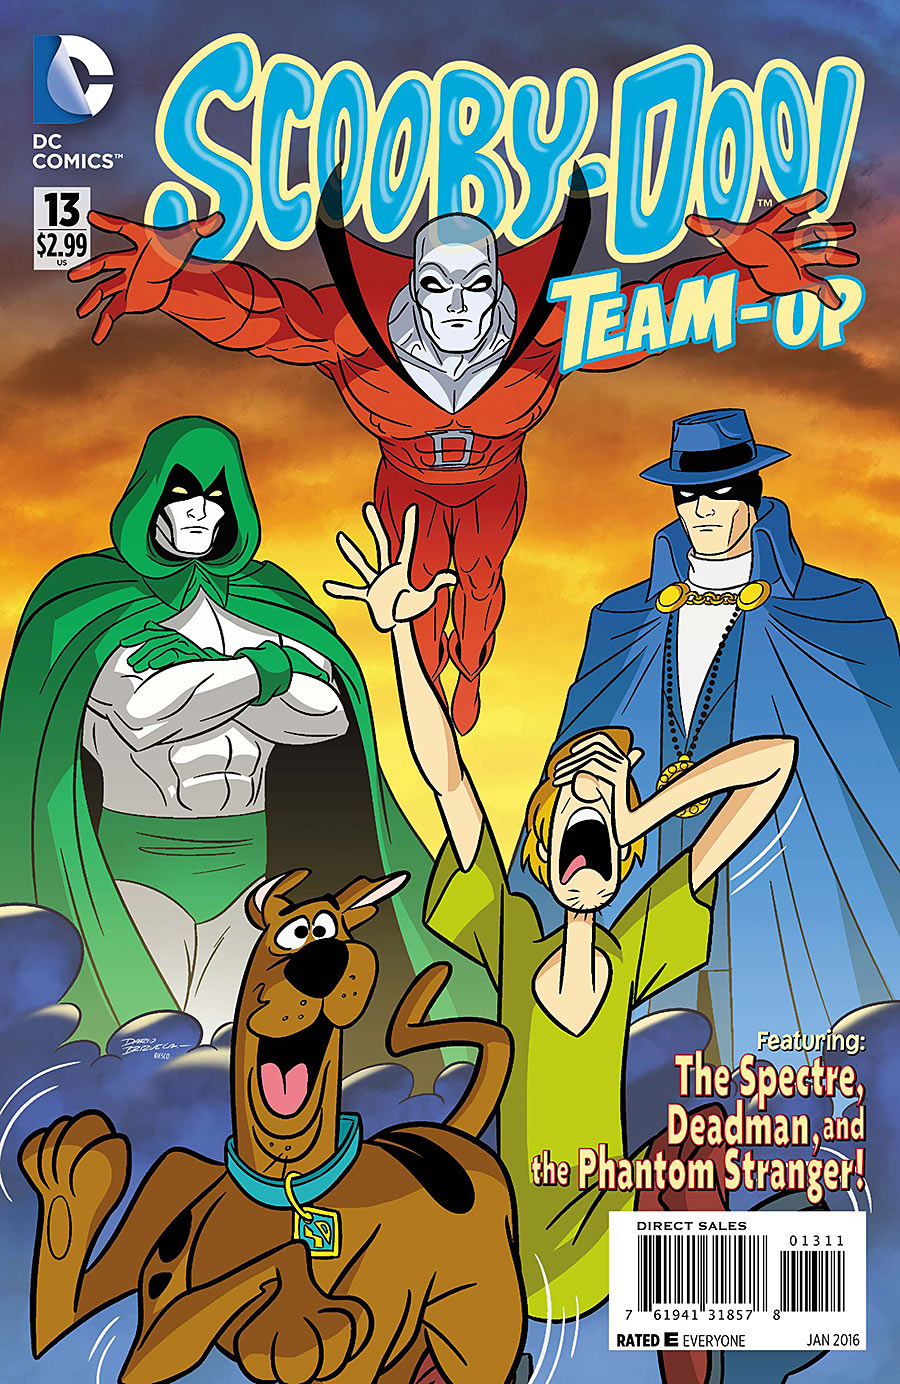 Howie's World of Comics: Scooby Doo Team Up #13 (DC Comics)